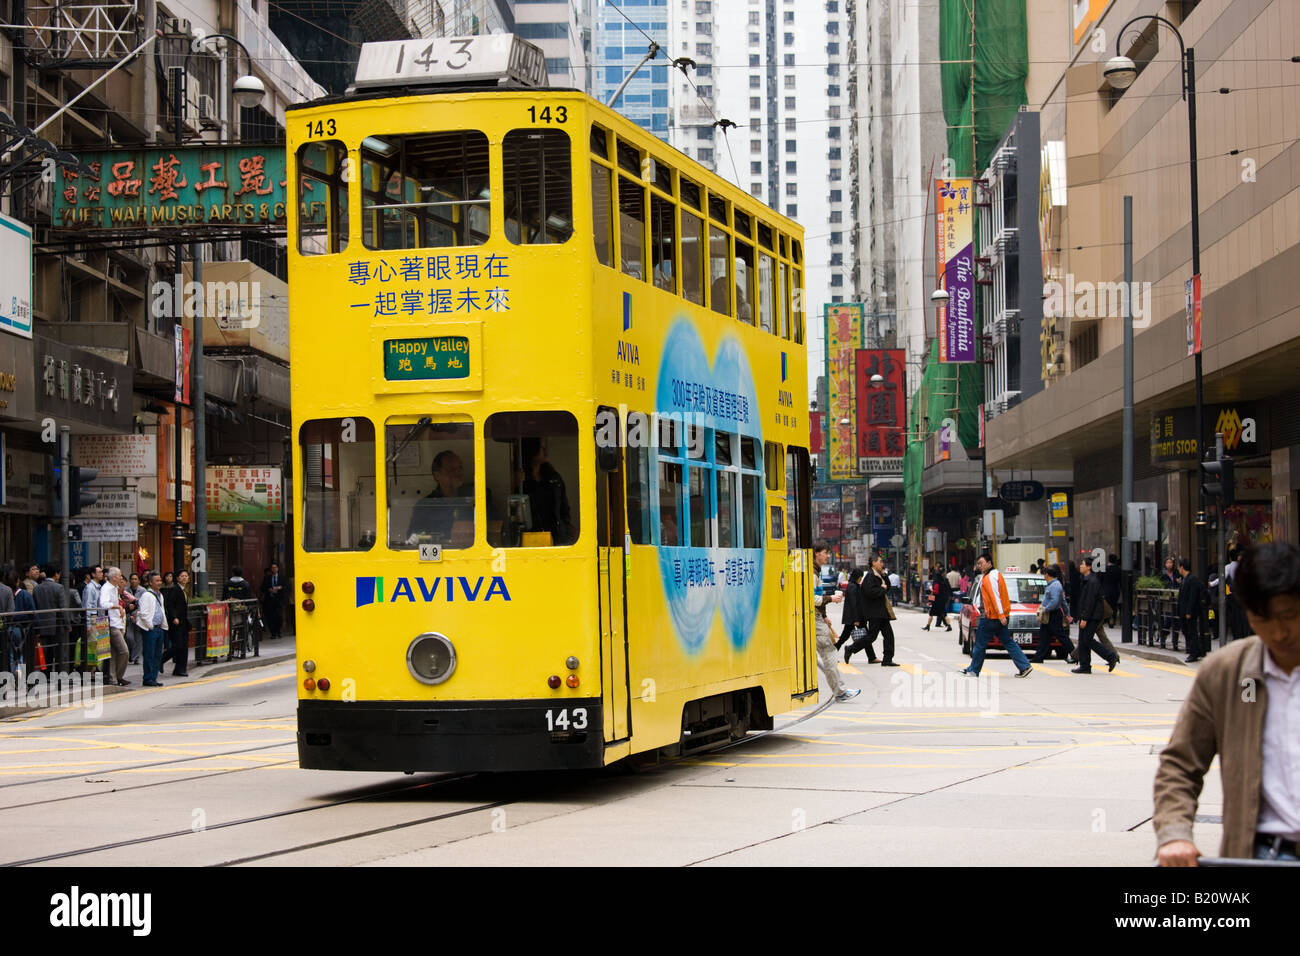 Straßenbahn in traditionellen chinesischen Altstadt Des Voeux Road Sheung Wan Hong Kong Island China Stockfoto